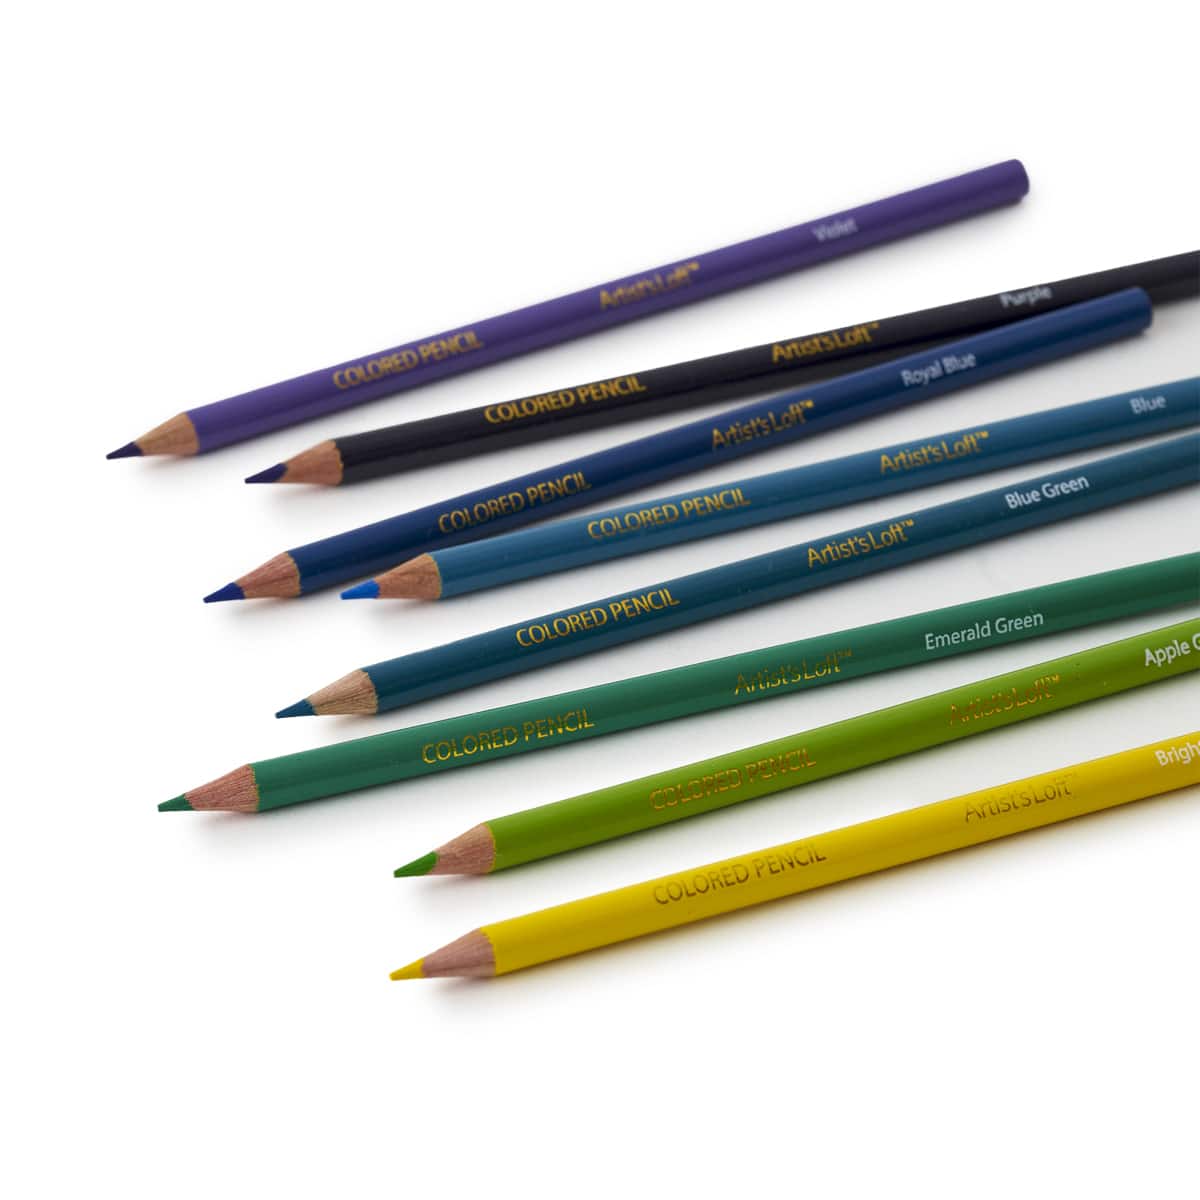 6 Packs: 150 ct. (900 total) Colored Pencil Set by Artist's Loft